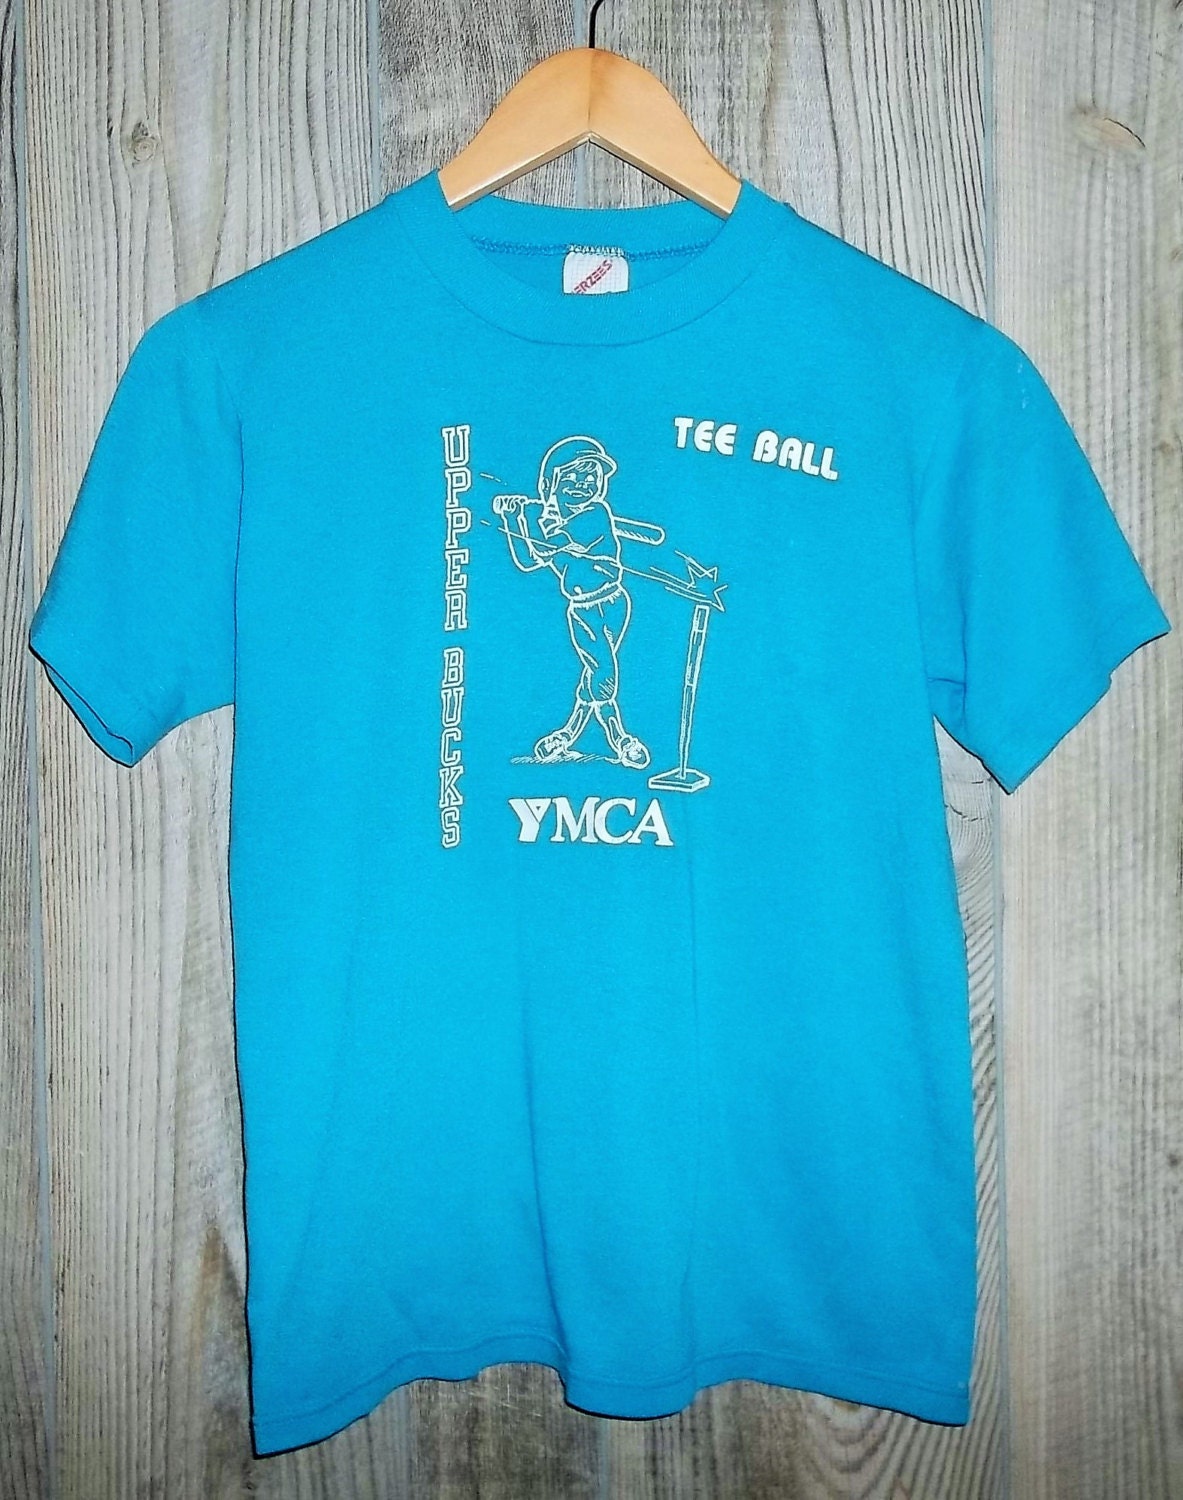 Vintage YMCA Shirt XS Teal Blue Upper Bucks T Ball Thin Soft